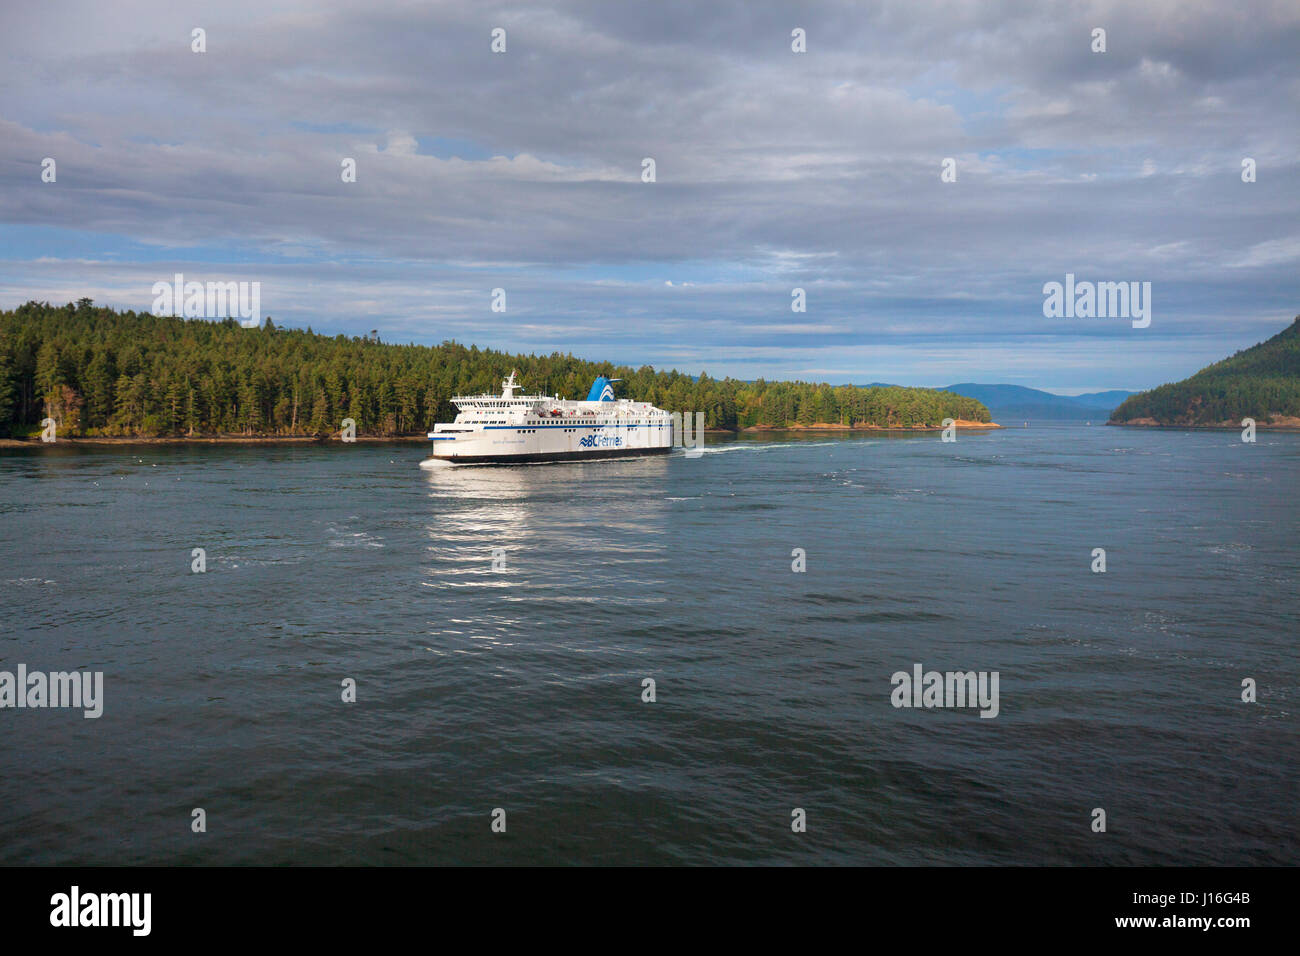 British Columbia Ferry On The Gulf Islands In The Salish Sea Stock Photo